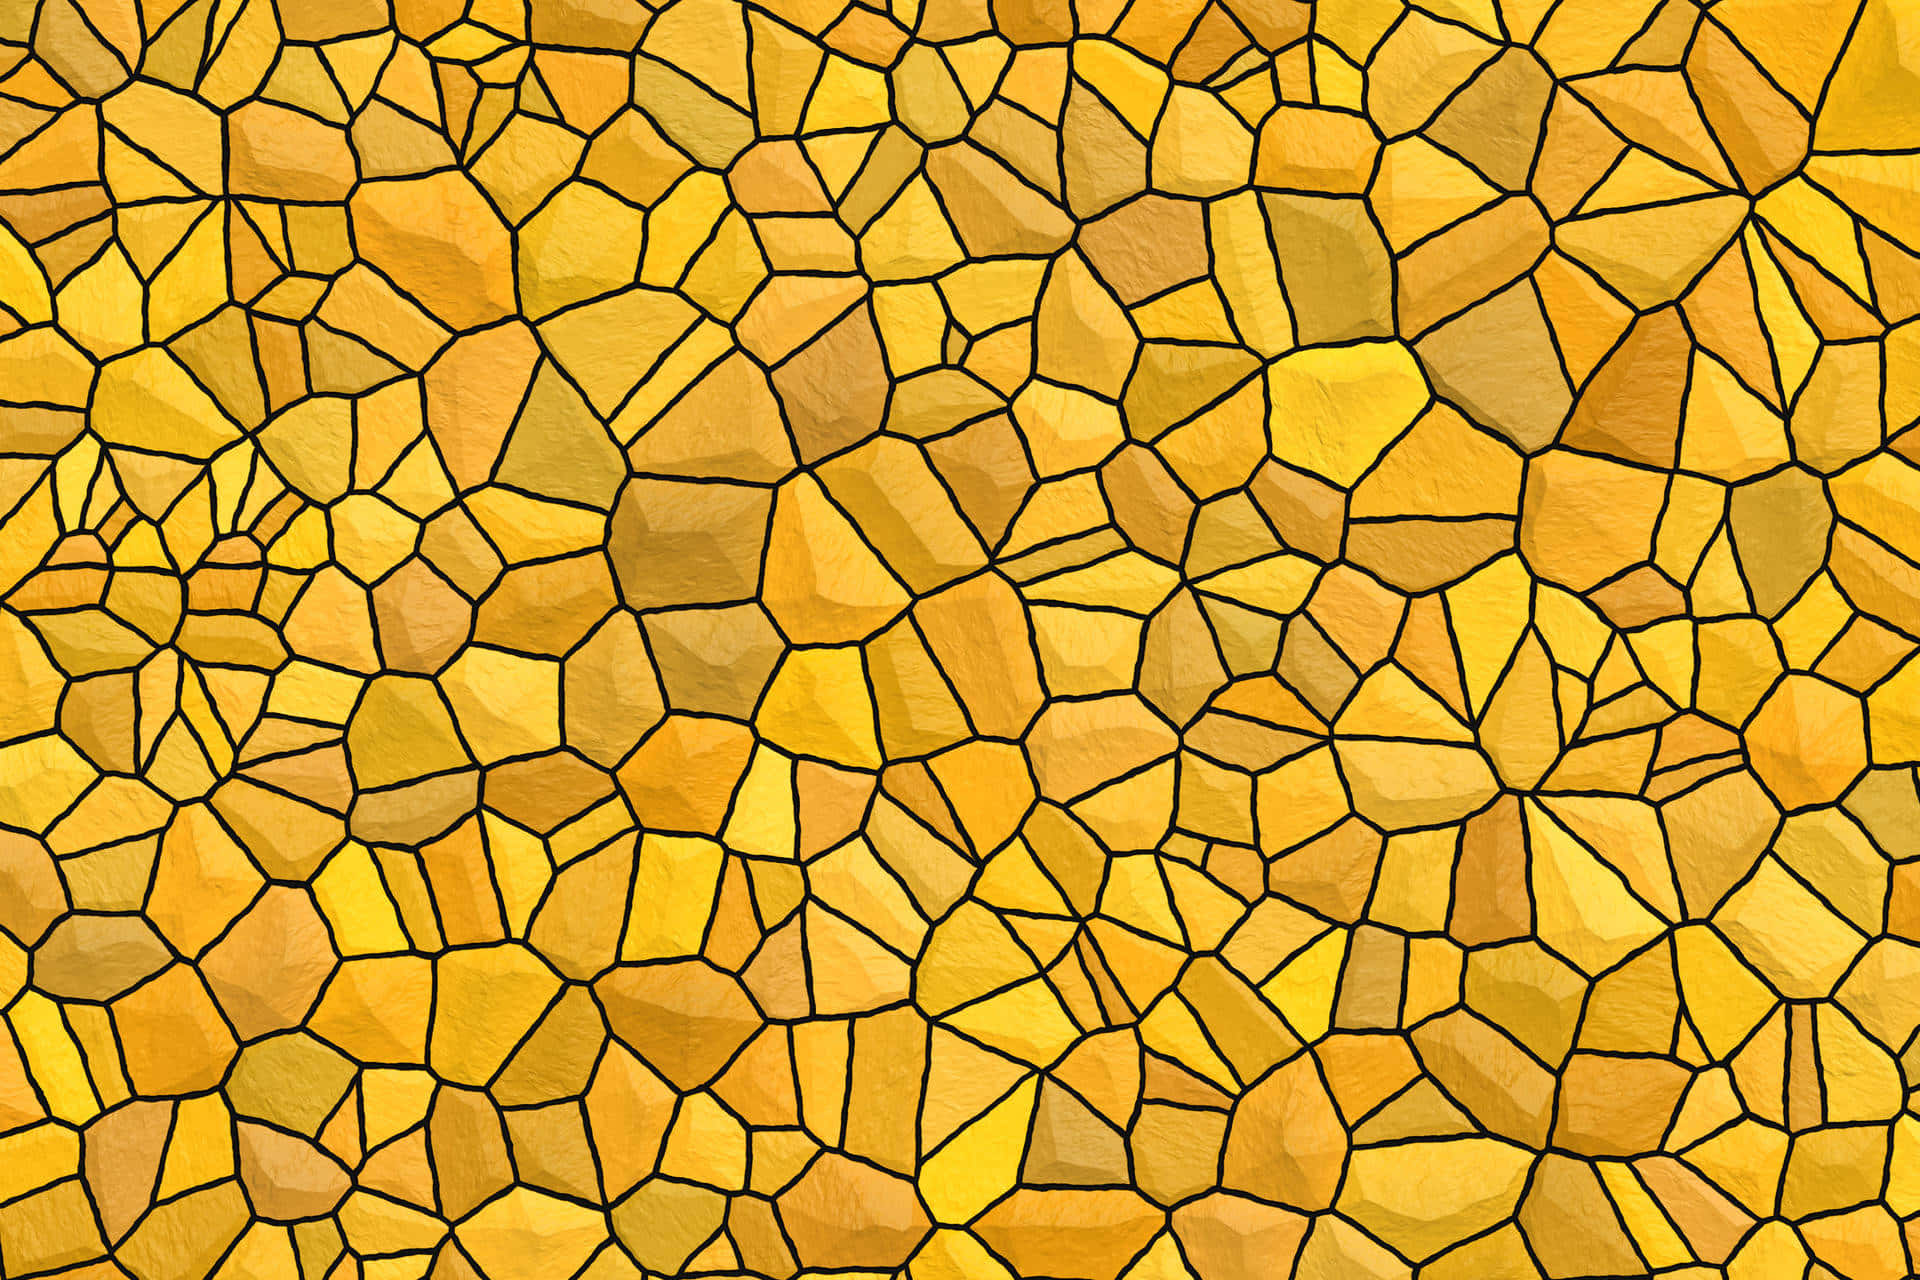 Yellow Textured Plain Background Wallpaper Stock Image  Image of black  artwork 137515345